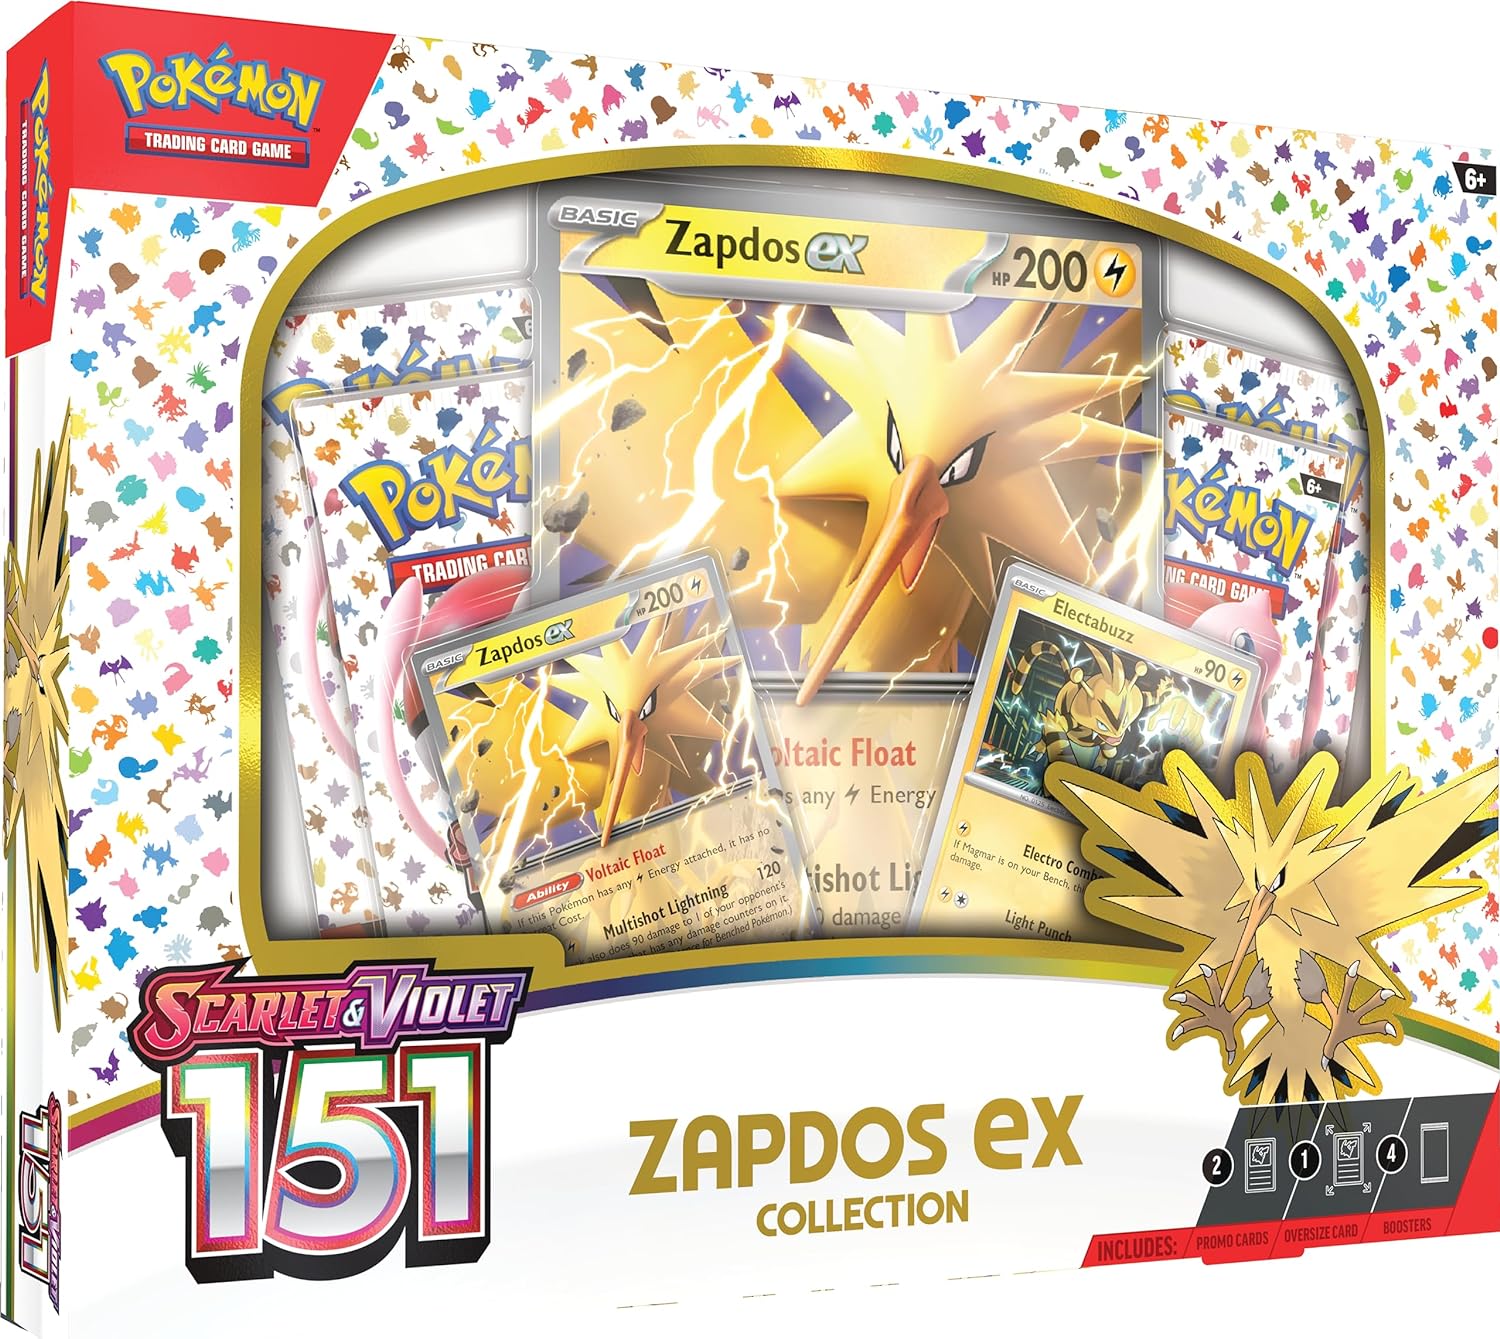 Pokemon TCG: Scarlet & Violet 151 Collection  Zapdos ex Box